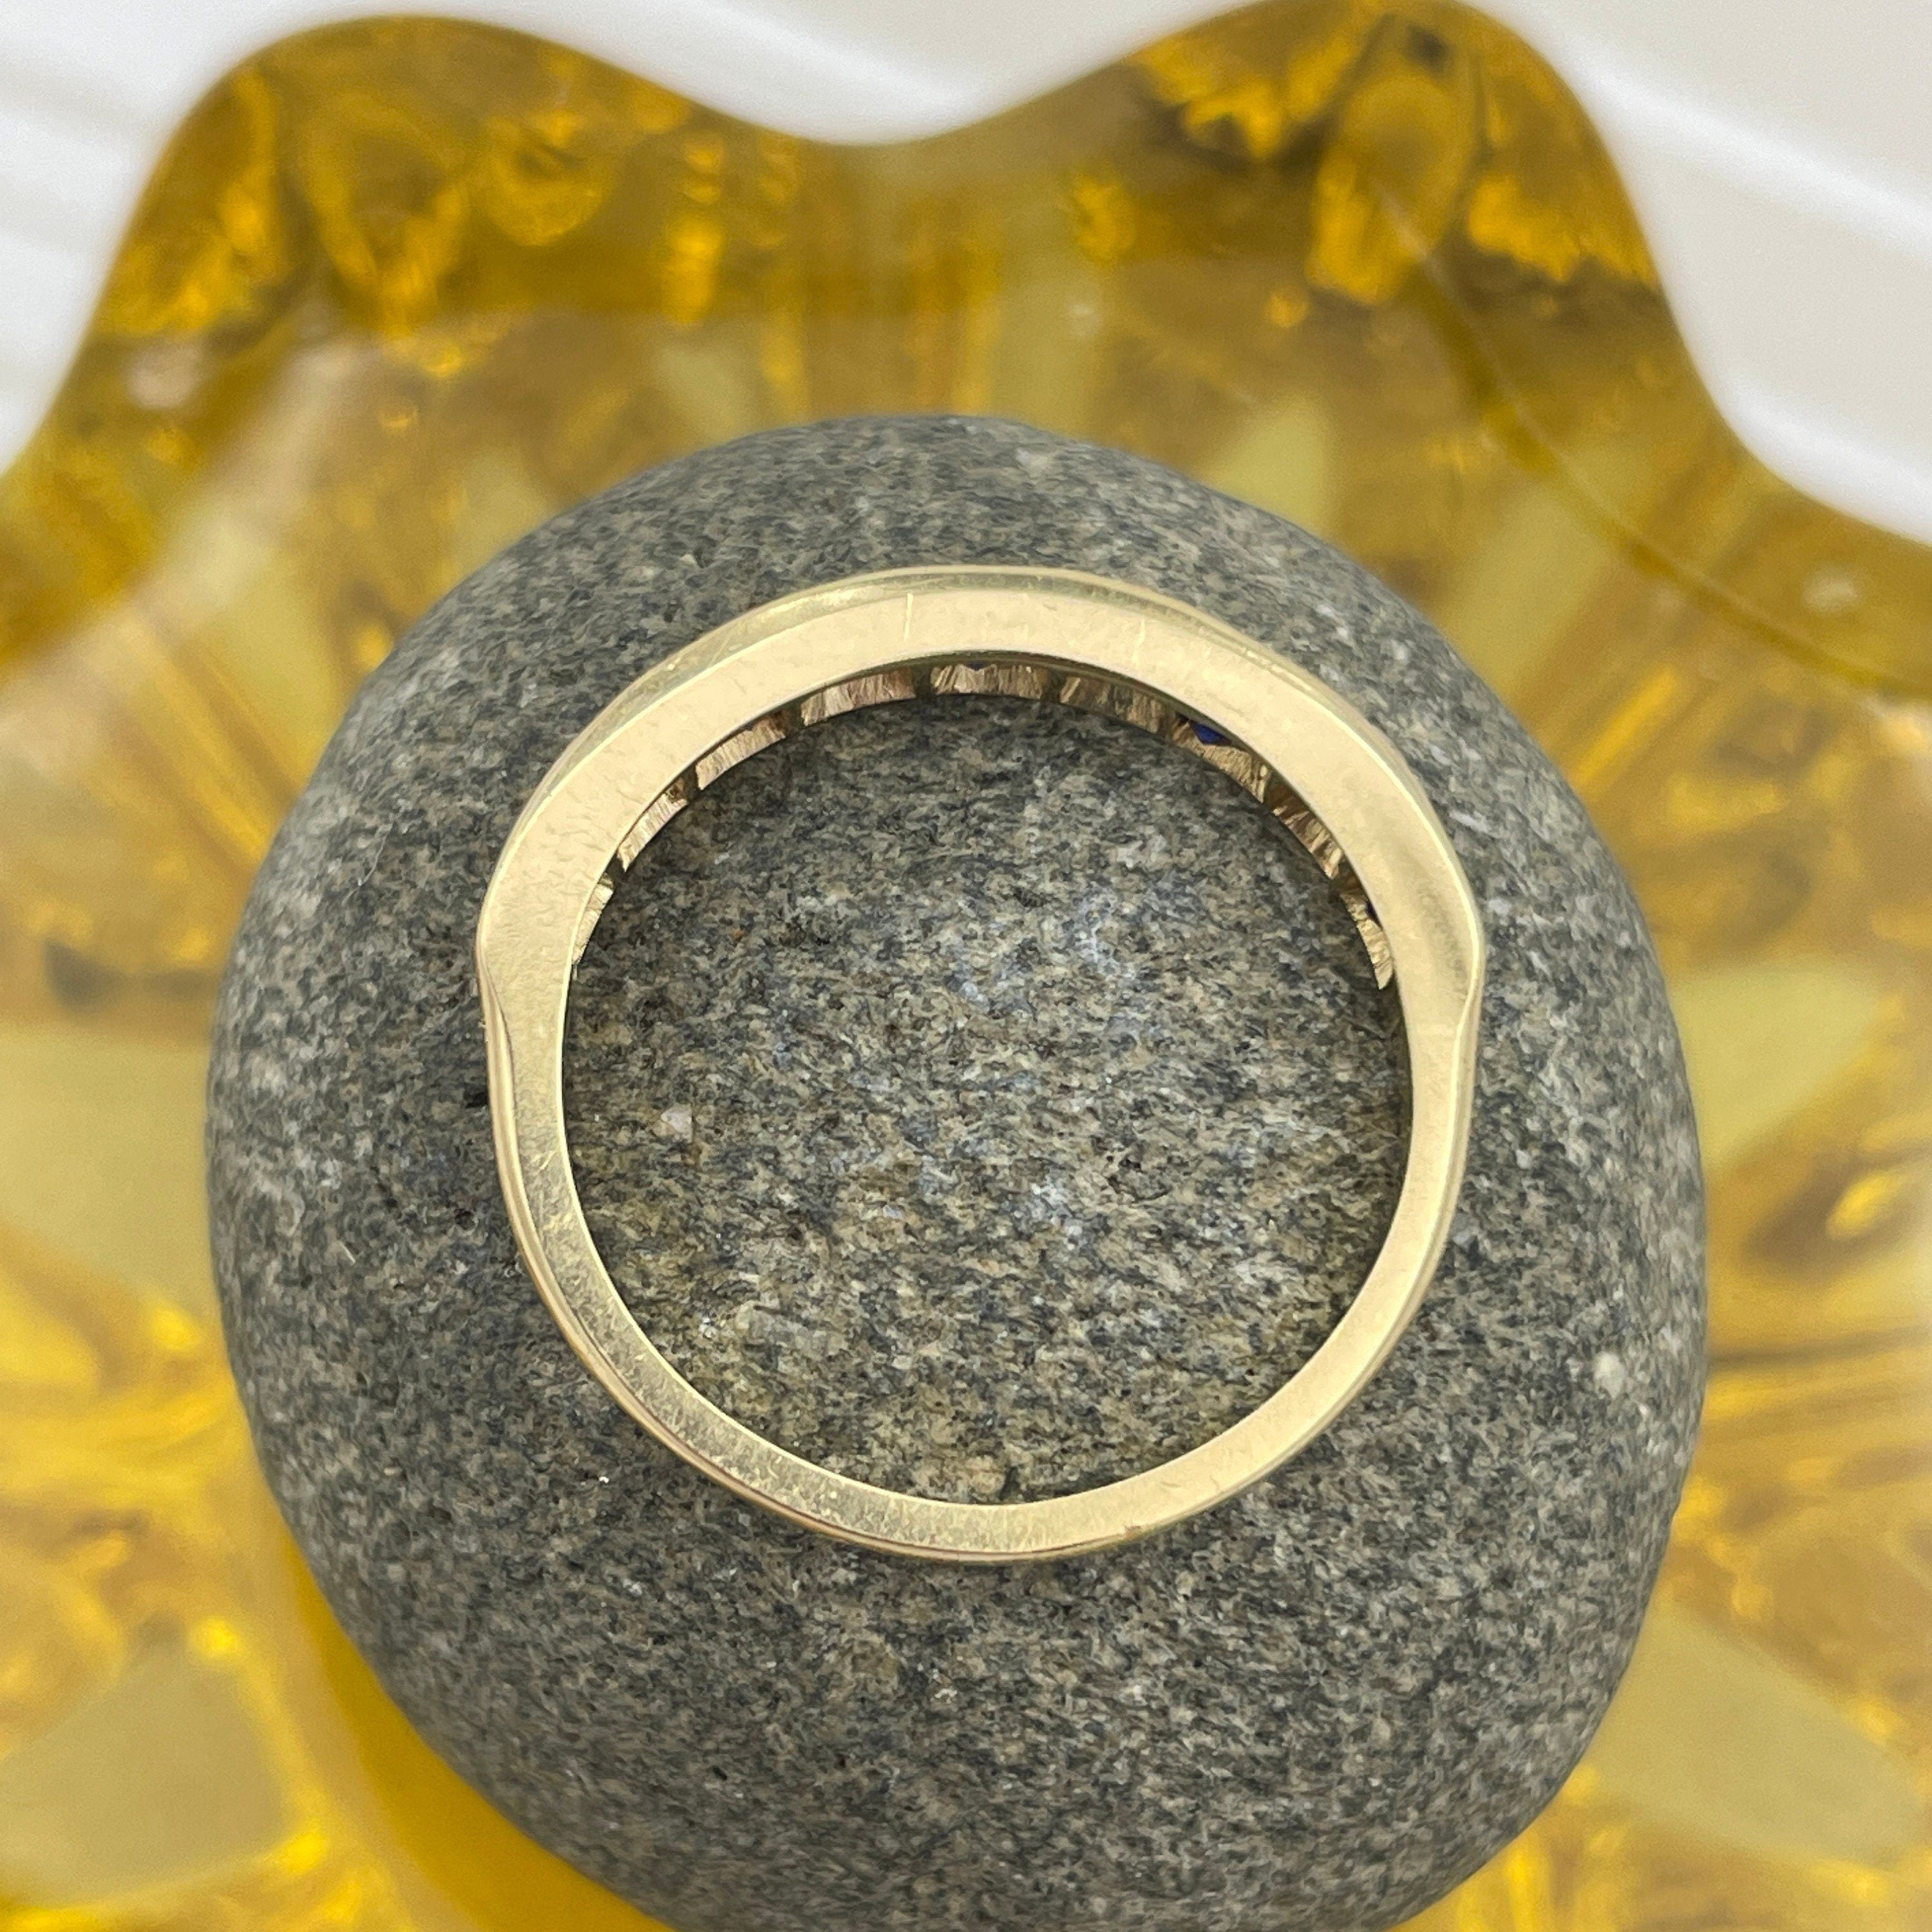 Art deco, 18ct gold old cut diamond & sapphire half eternity ring